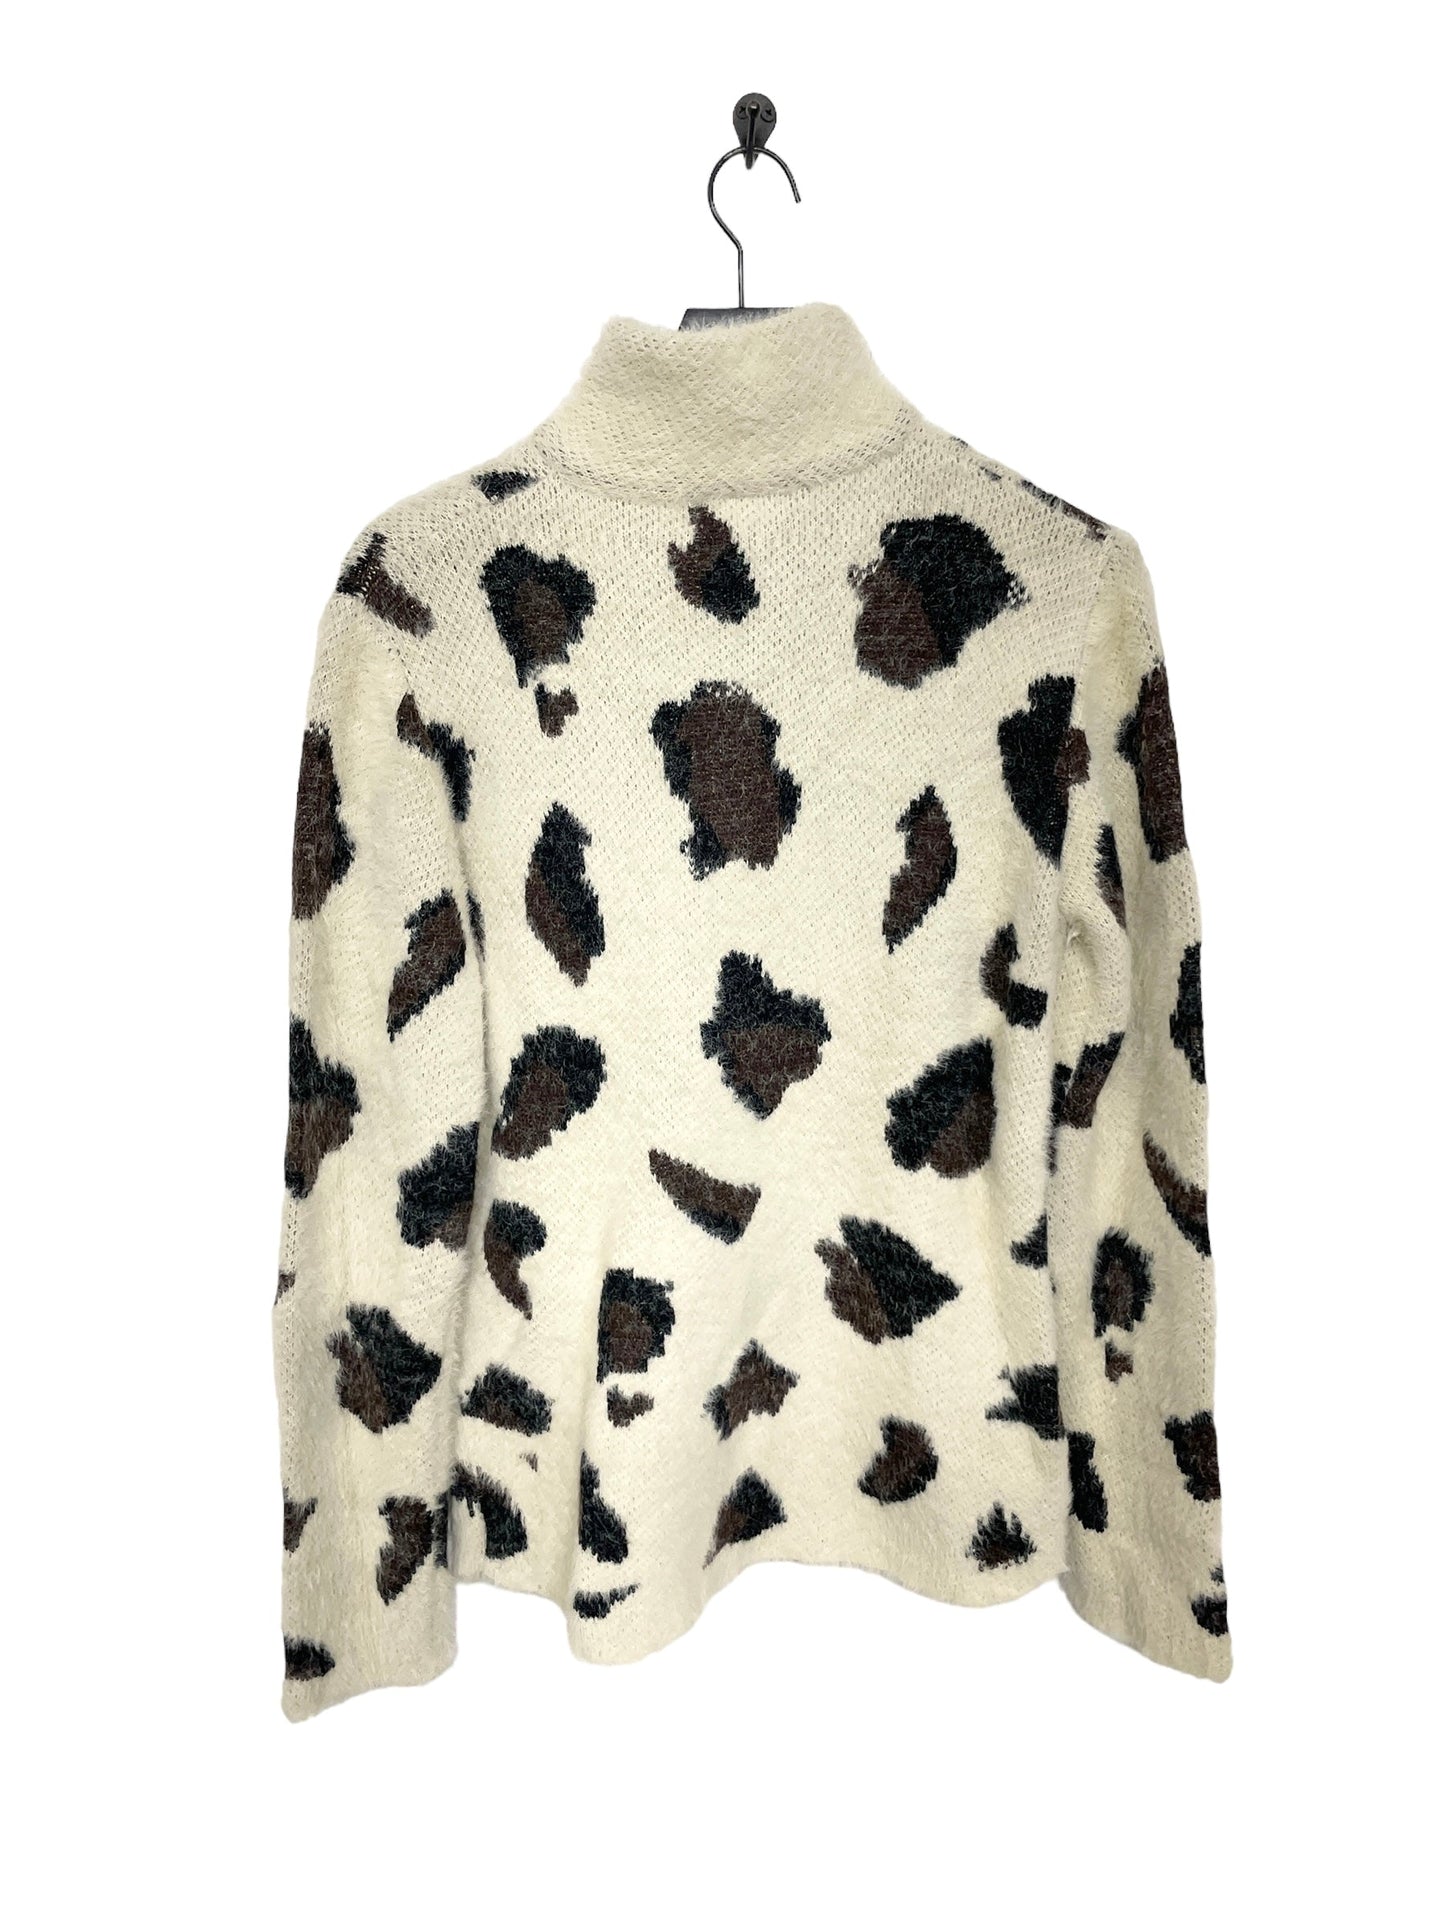 Leopard Print Sweater Entro, Size M